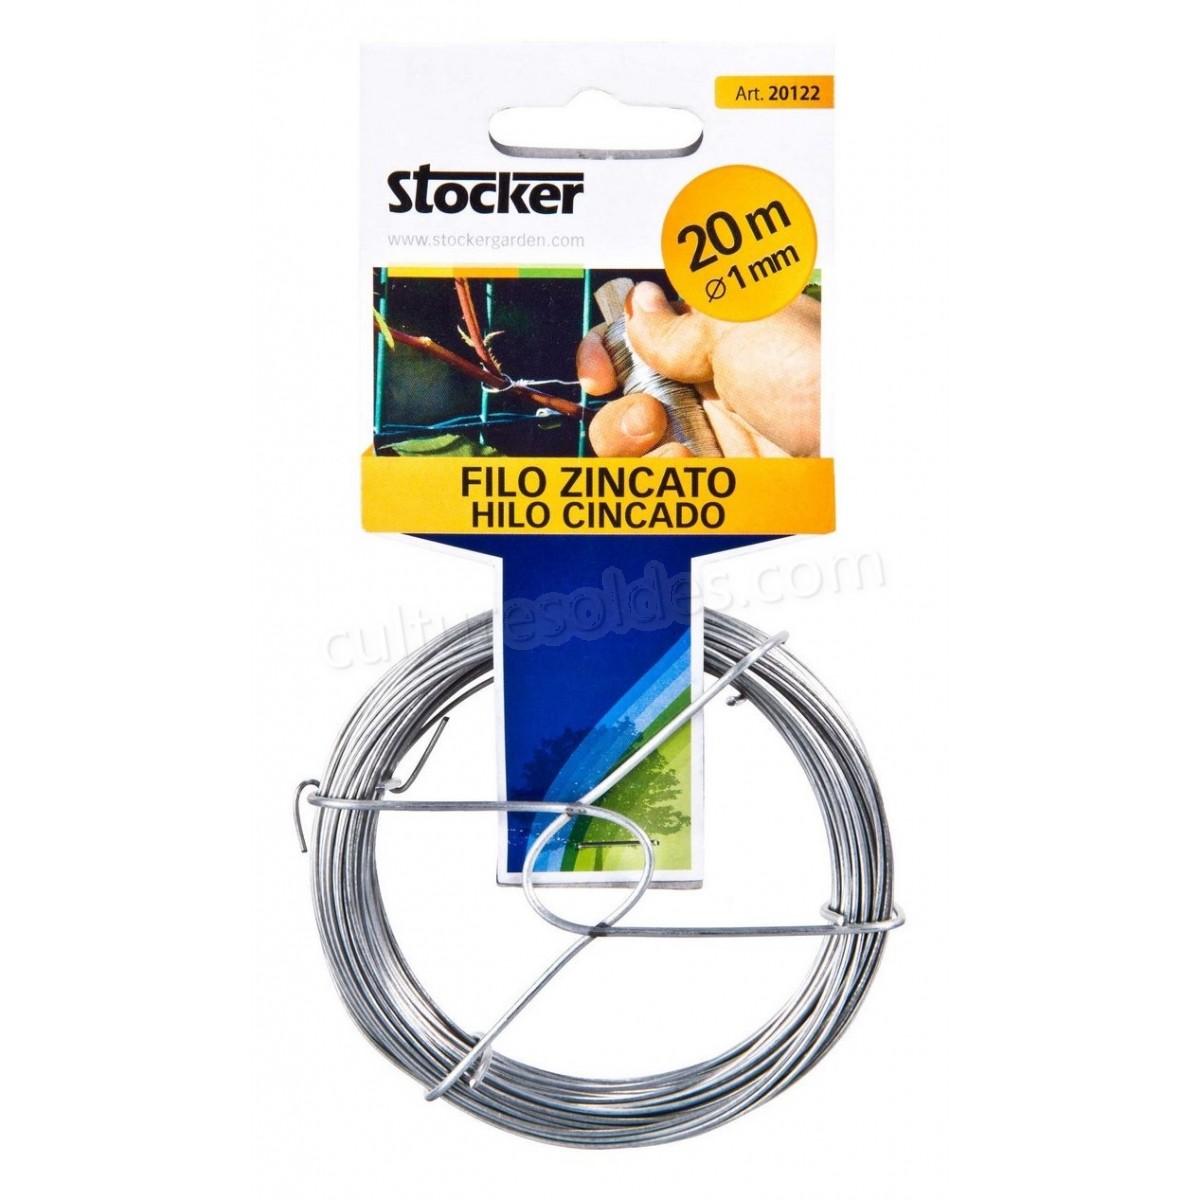 Stocker Filo zincato Ã¸1 mm 20 m soldes en ligne - Stocker Filo zincato Ã¸1 mm 20 m soldes en ligne